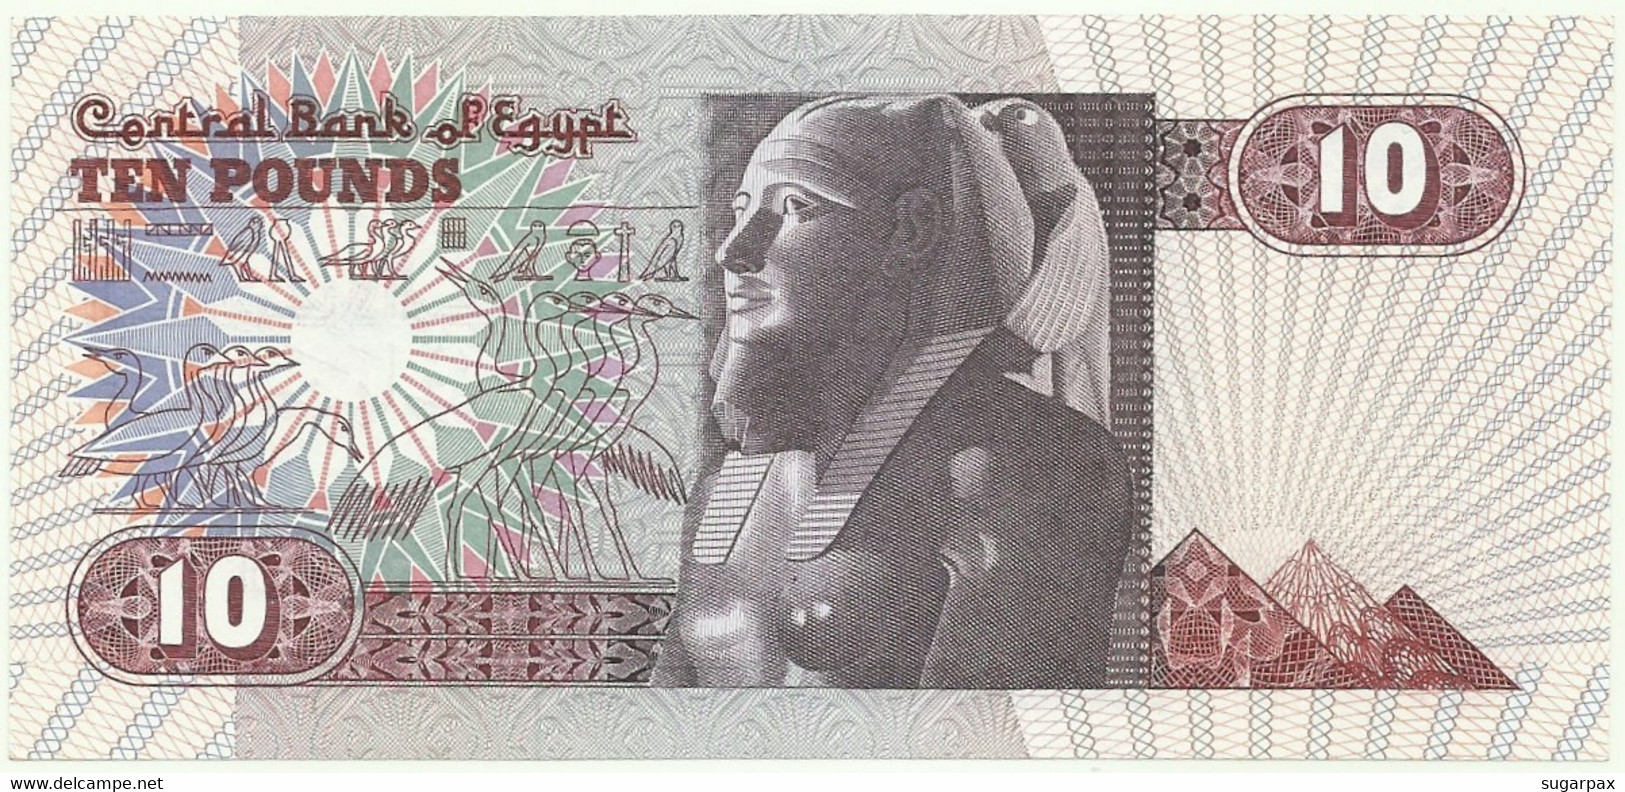 Egypt - 10 Pounds - (19)85/04/20 - Pick 51.c - Unc. - Sign 17 - Serie 101 - 1985 - Egypte